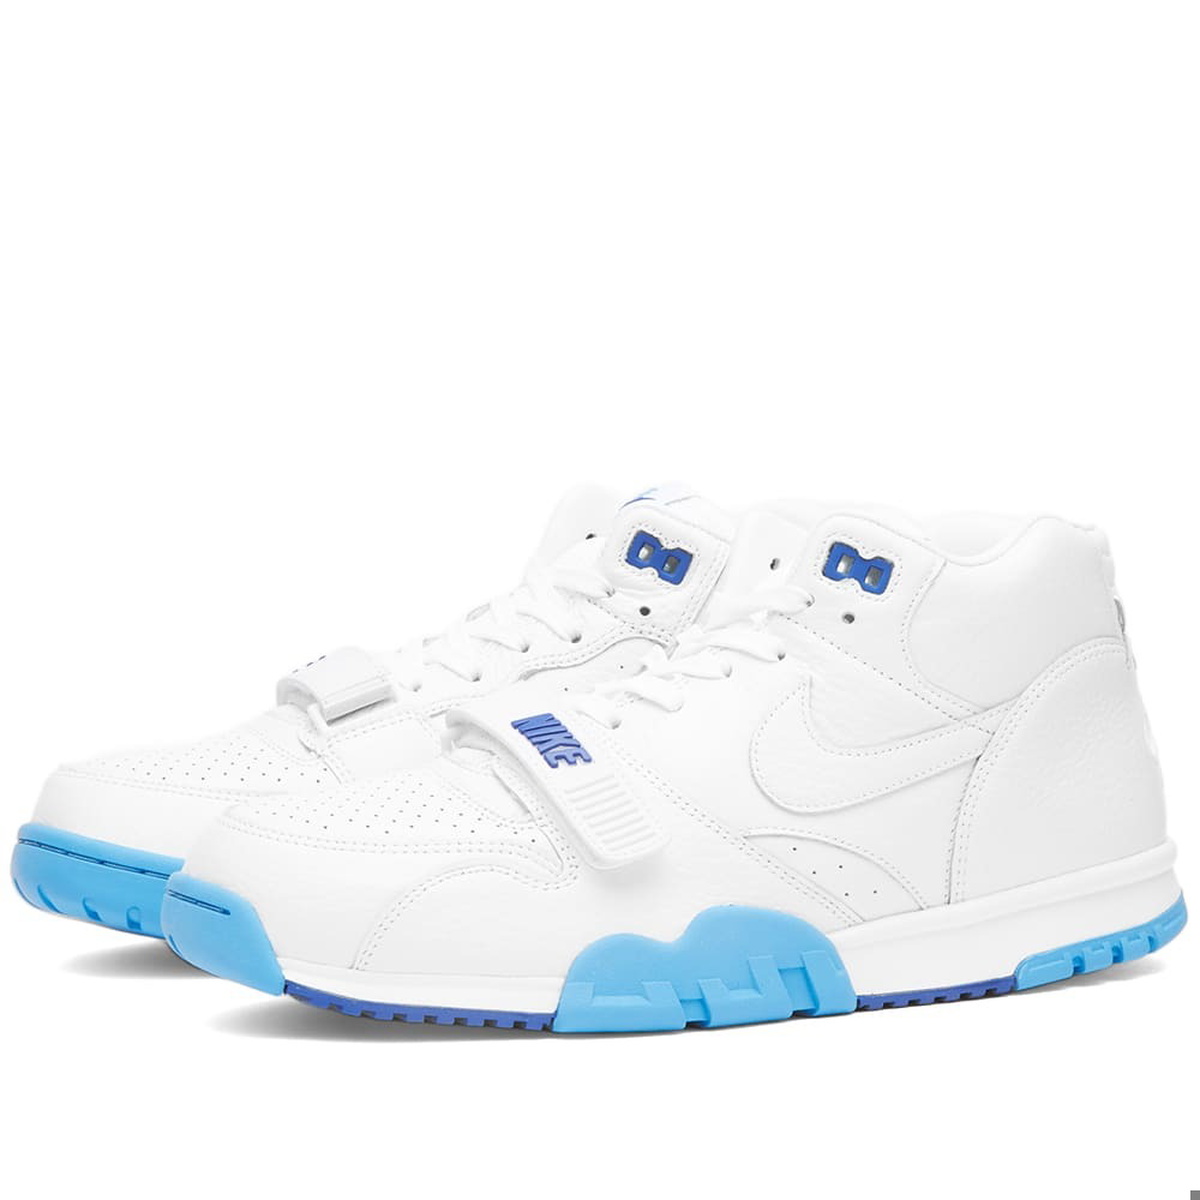 Nike Men's Air Trainer 1 Sneakers in White/University Blue/Old Royal Nike